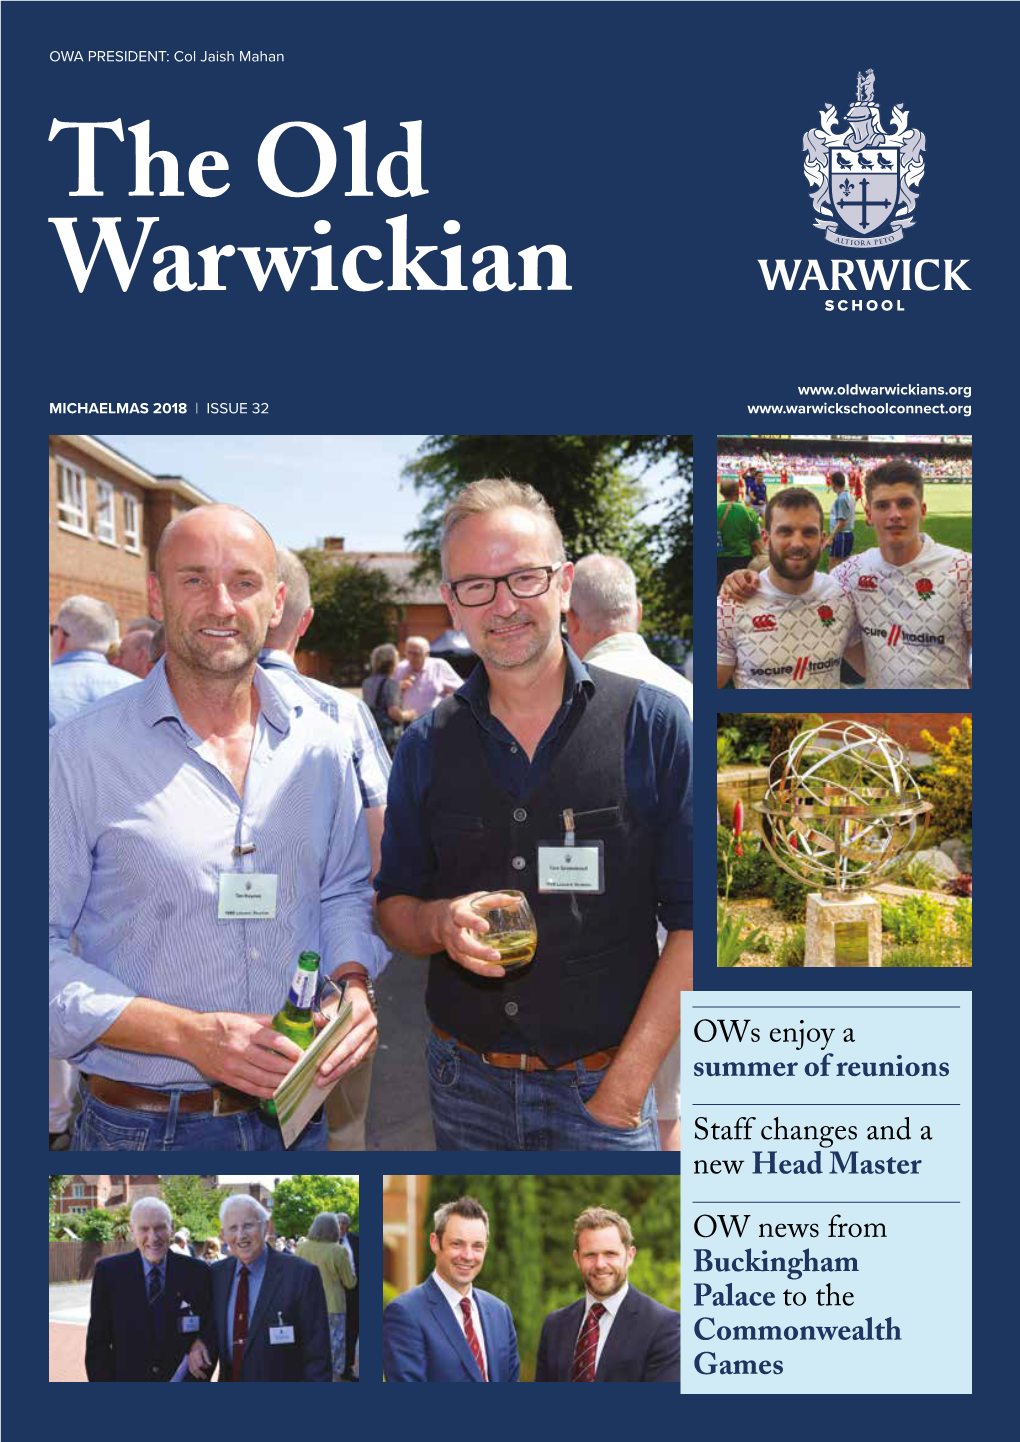 The Old Warwickian Newsletter. Michaelmas